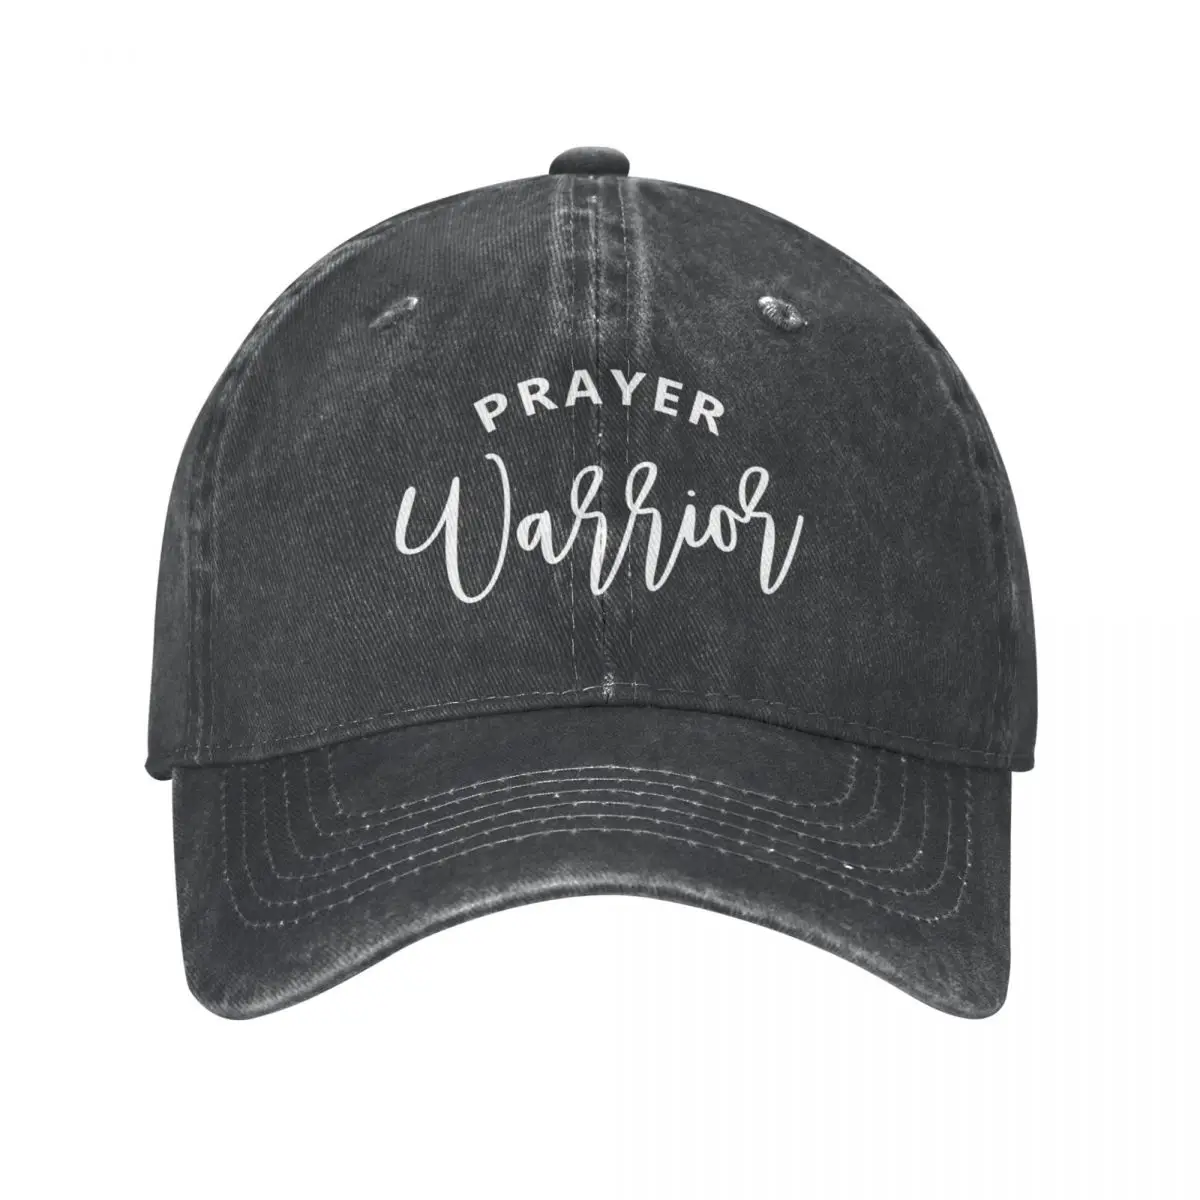 

Prayer Warrior | Christian Prayers | Faith Motivation Cowboy Hat cap snapback cap ny cap elegant women's hats Men's